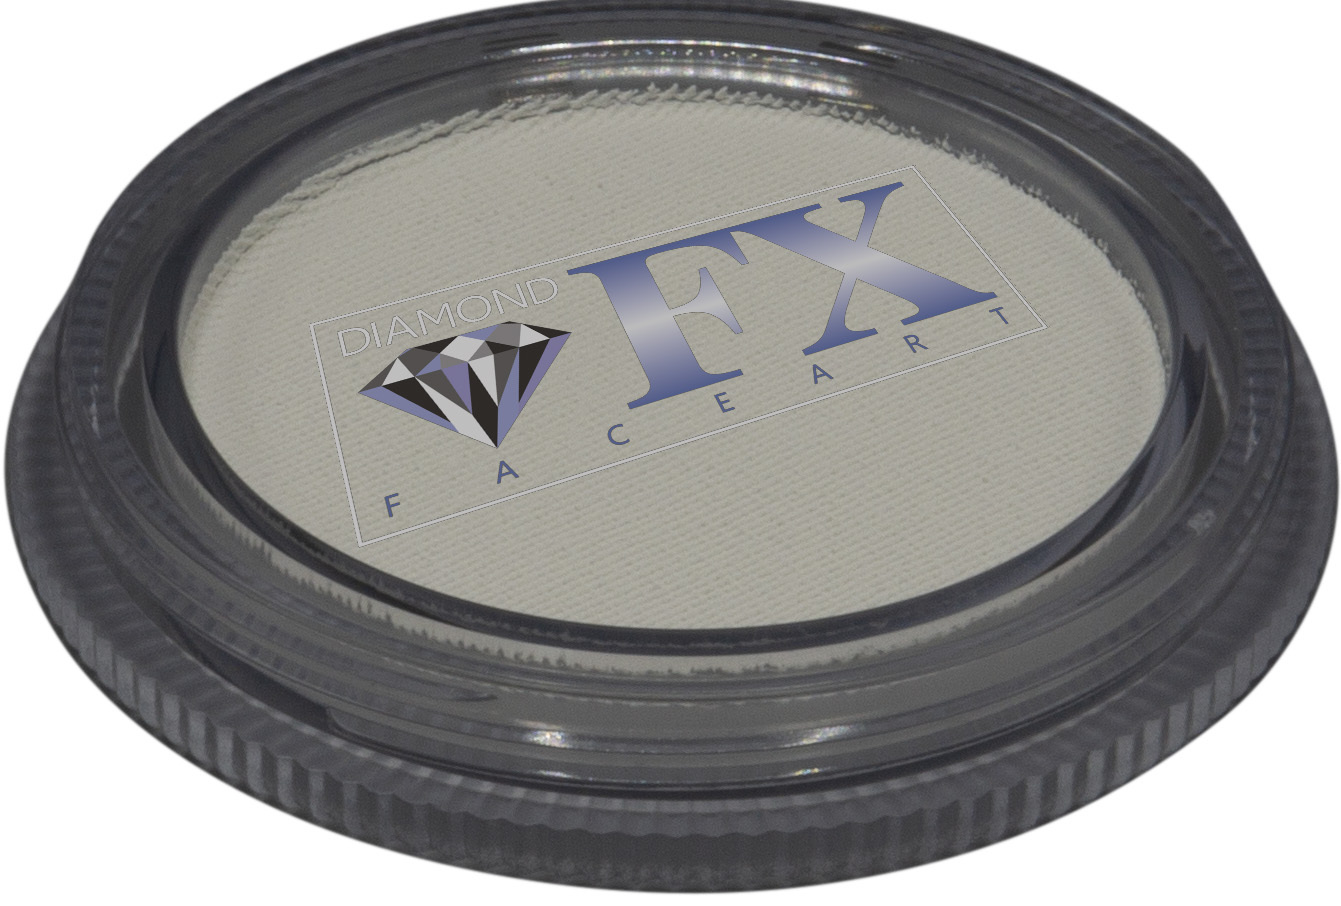 Diamond FX White 30g - Small Image